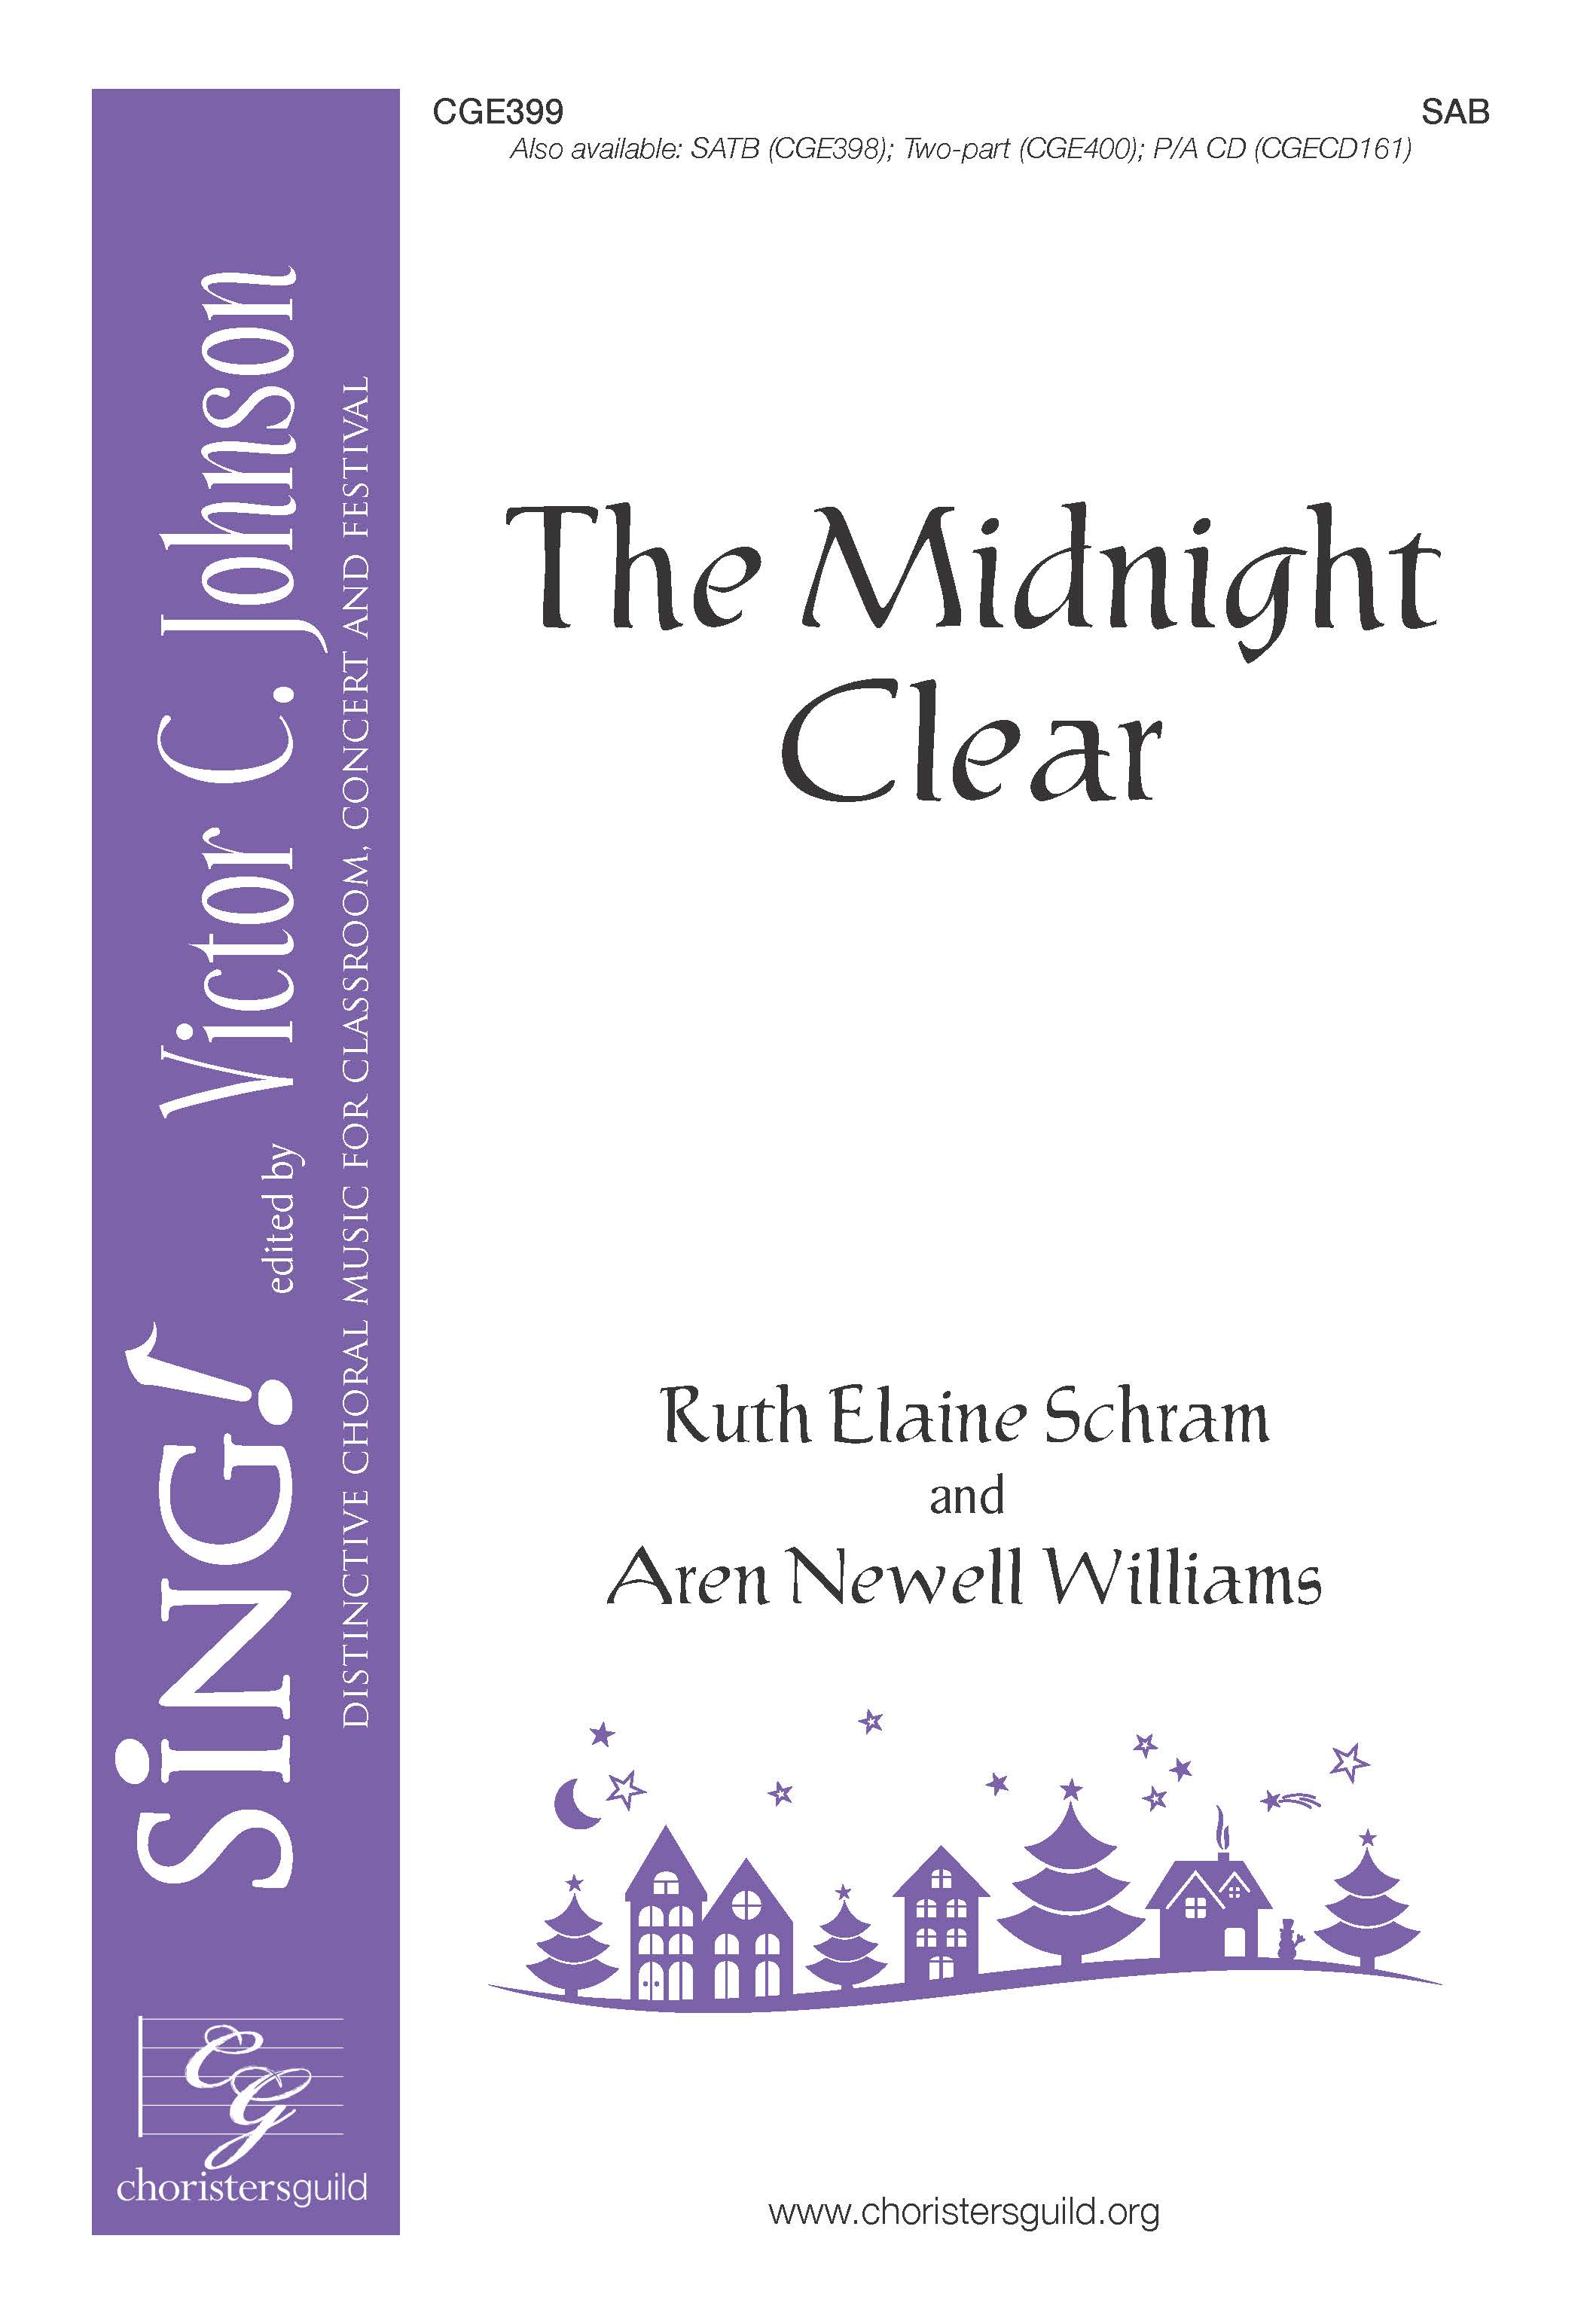 The Midnight Clear - SAB